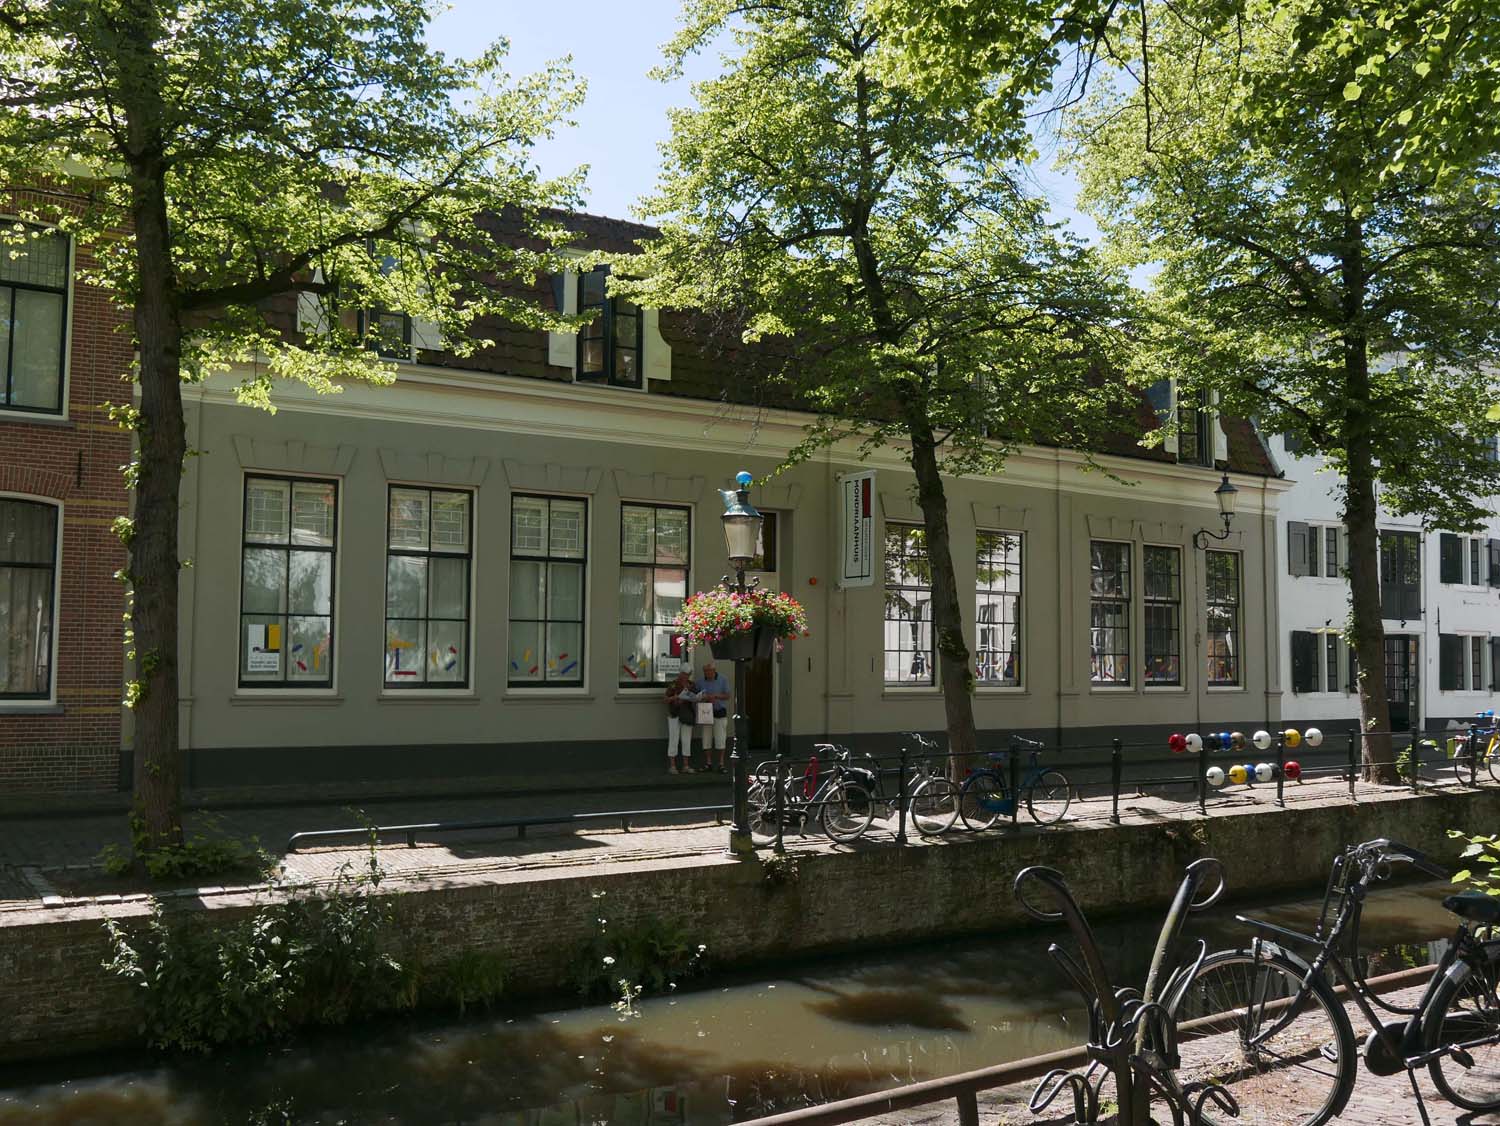 Piet Mondrian's birthplace